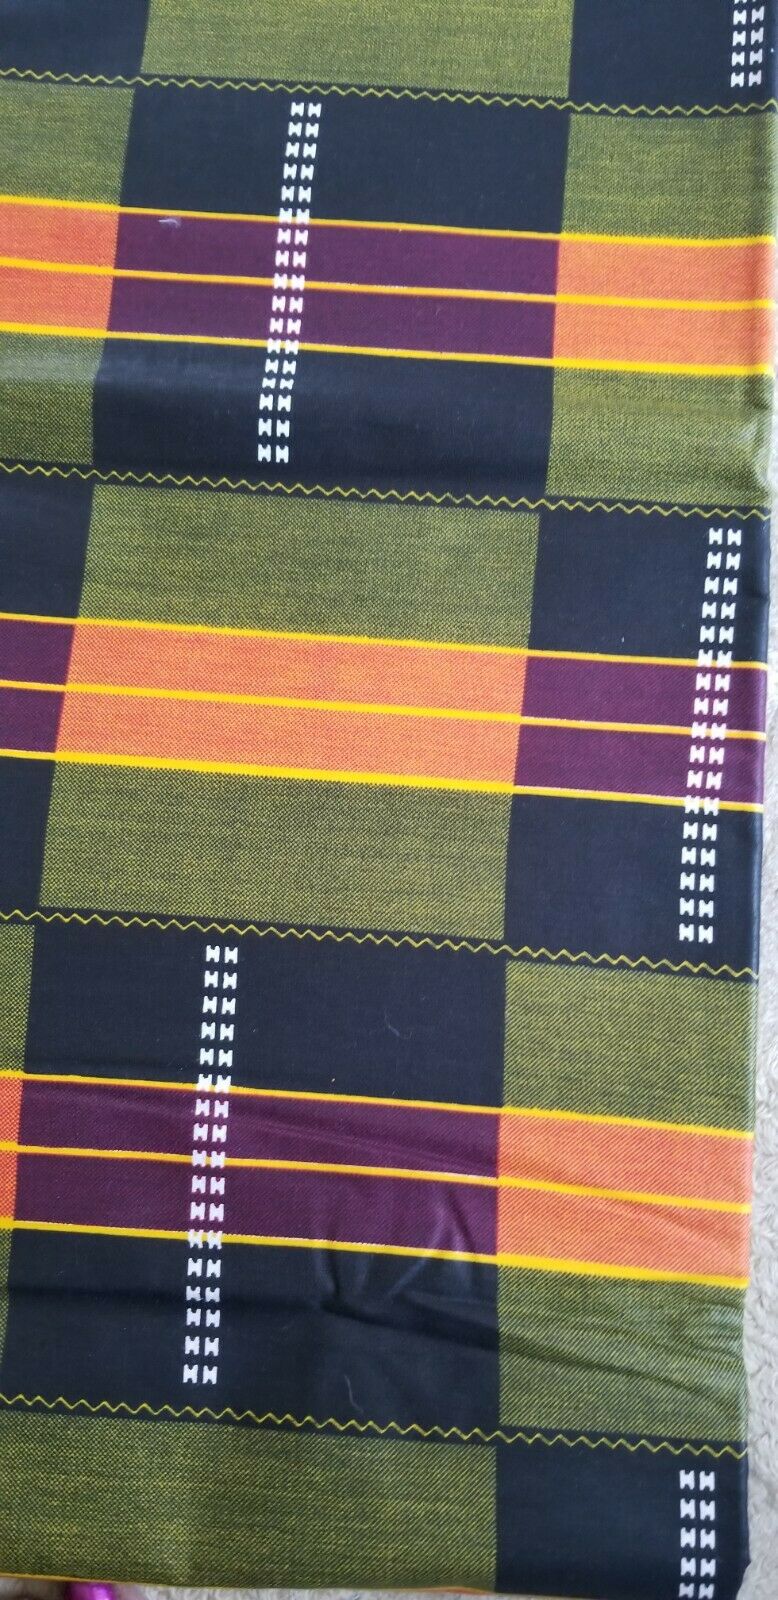 Kente Print African Wax Print 100% Cotton Fabric ~1 yd~$7.25 SALE!!!!$6.50